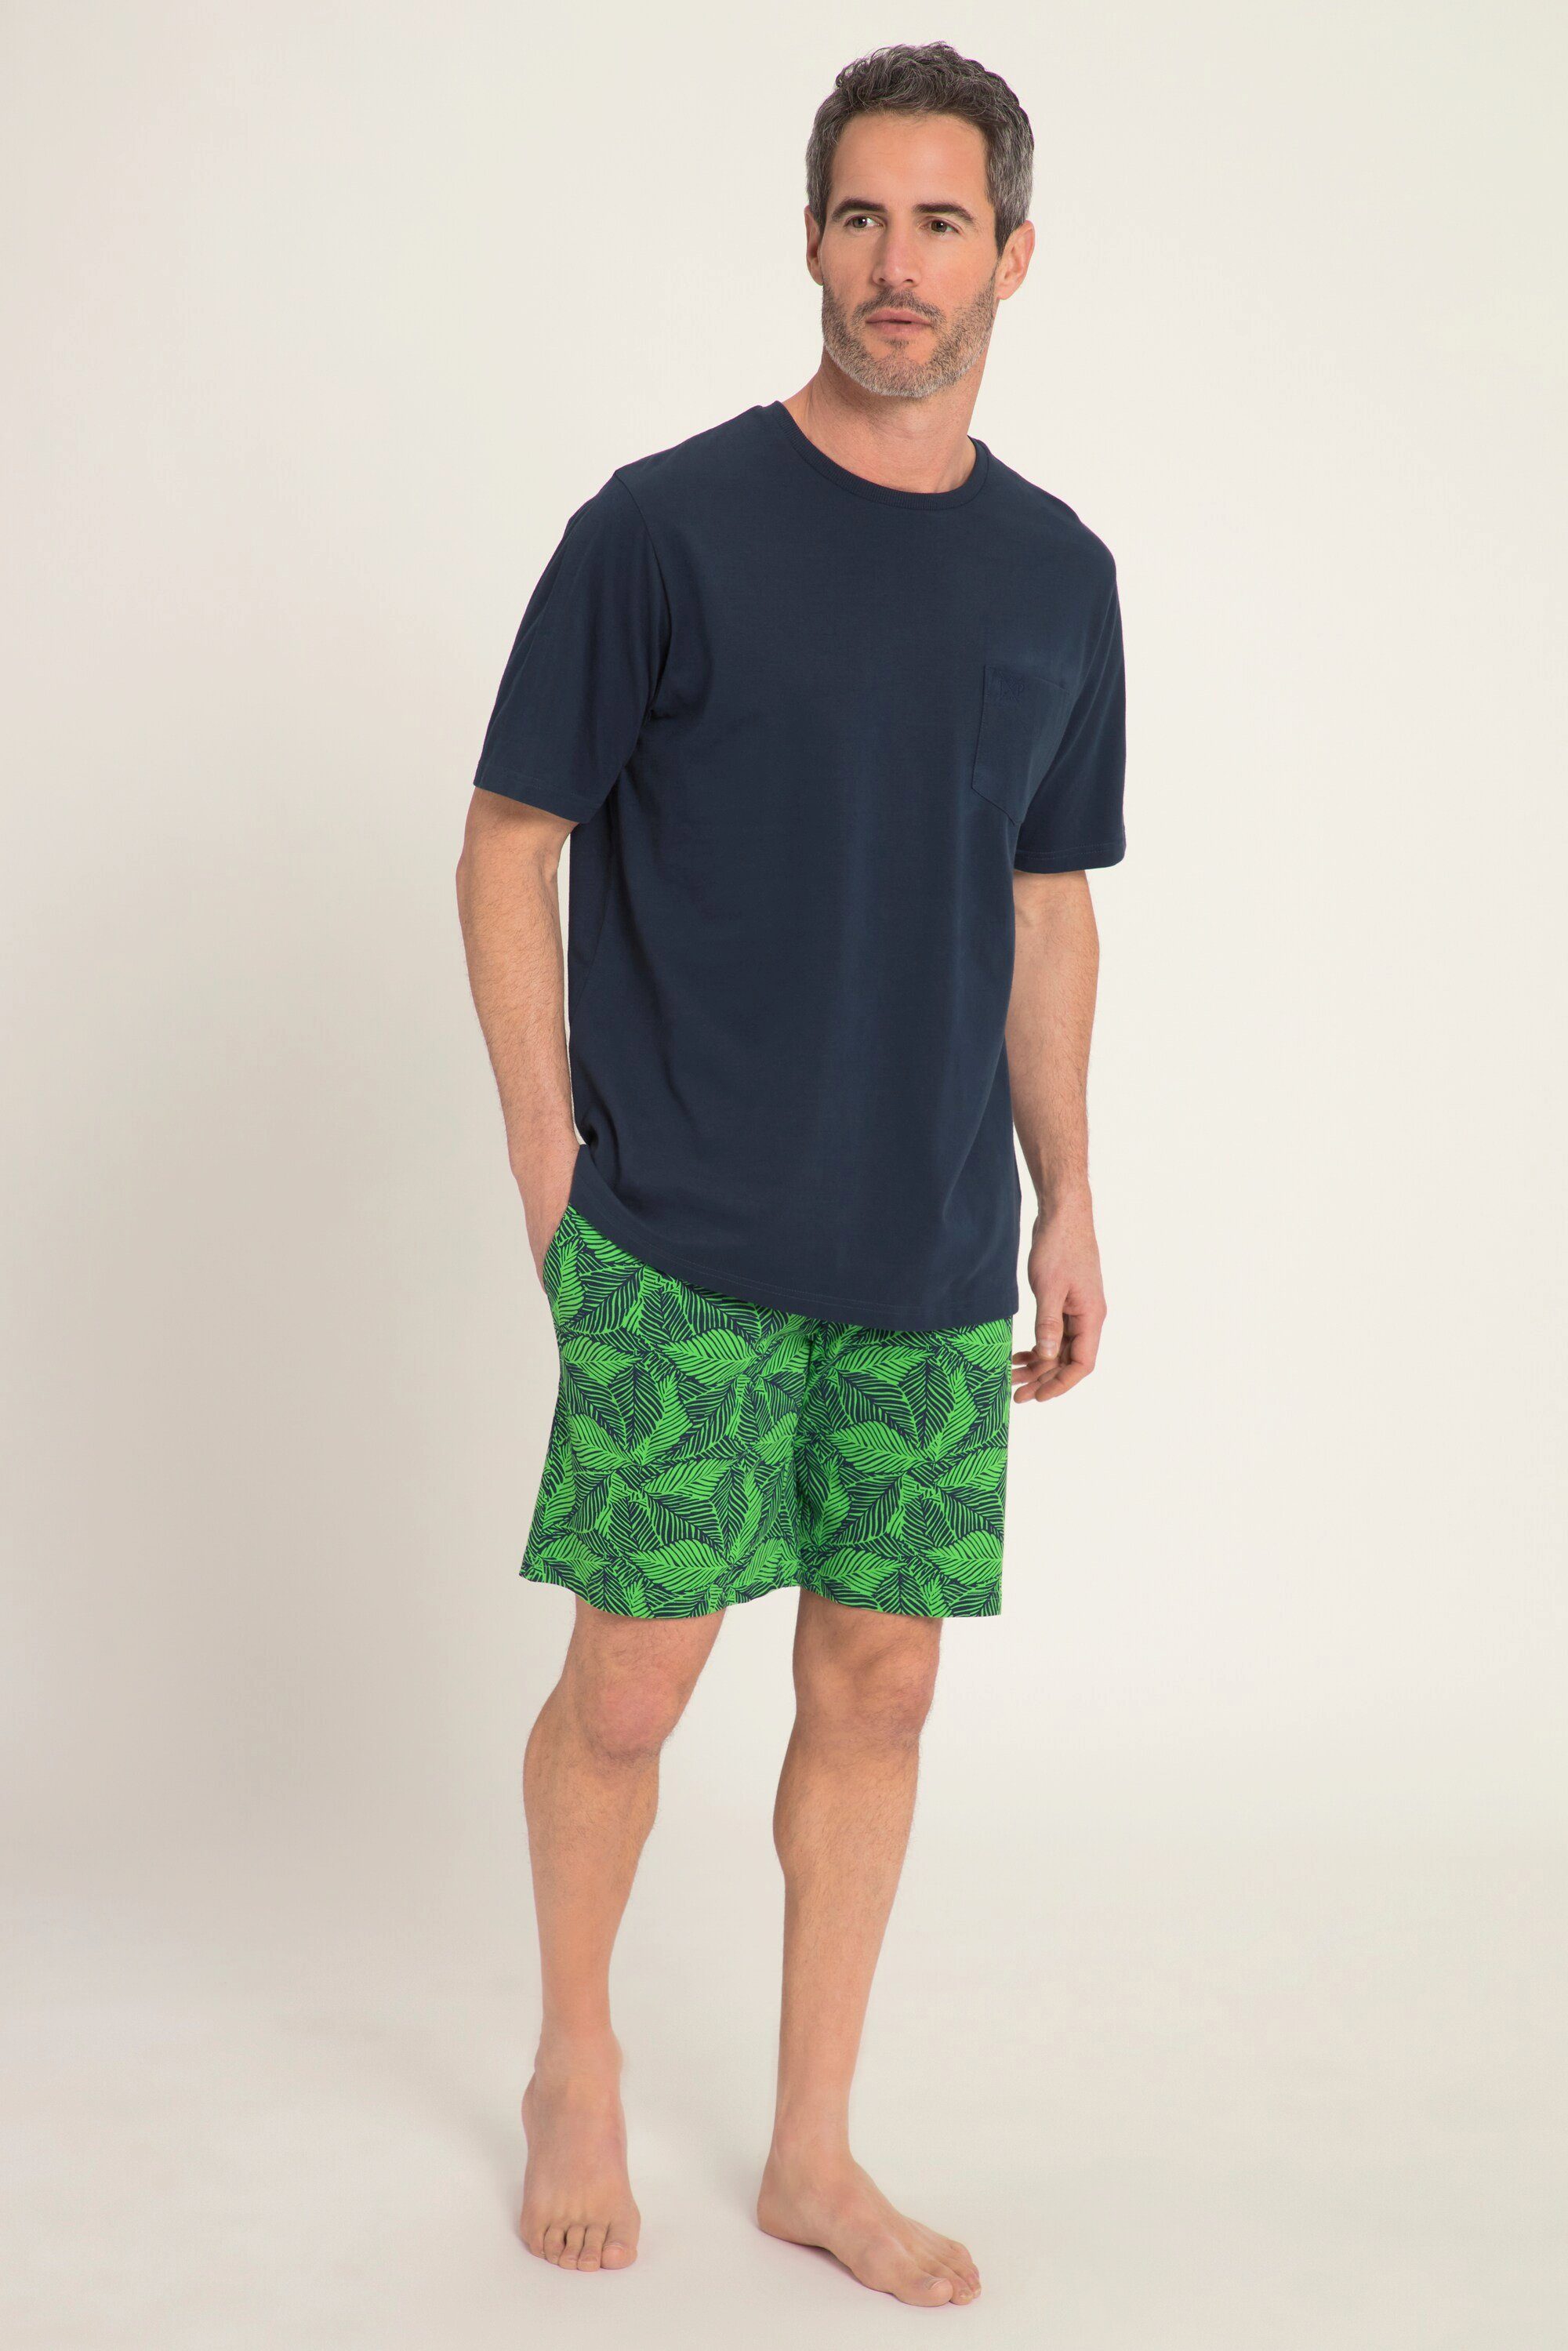 JP1880 Schlafanzug Schlafanzug Homewear Shirt uni Shorts mit Print